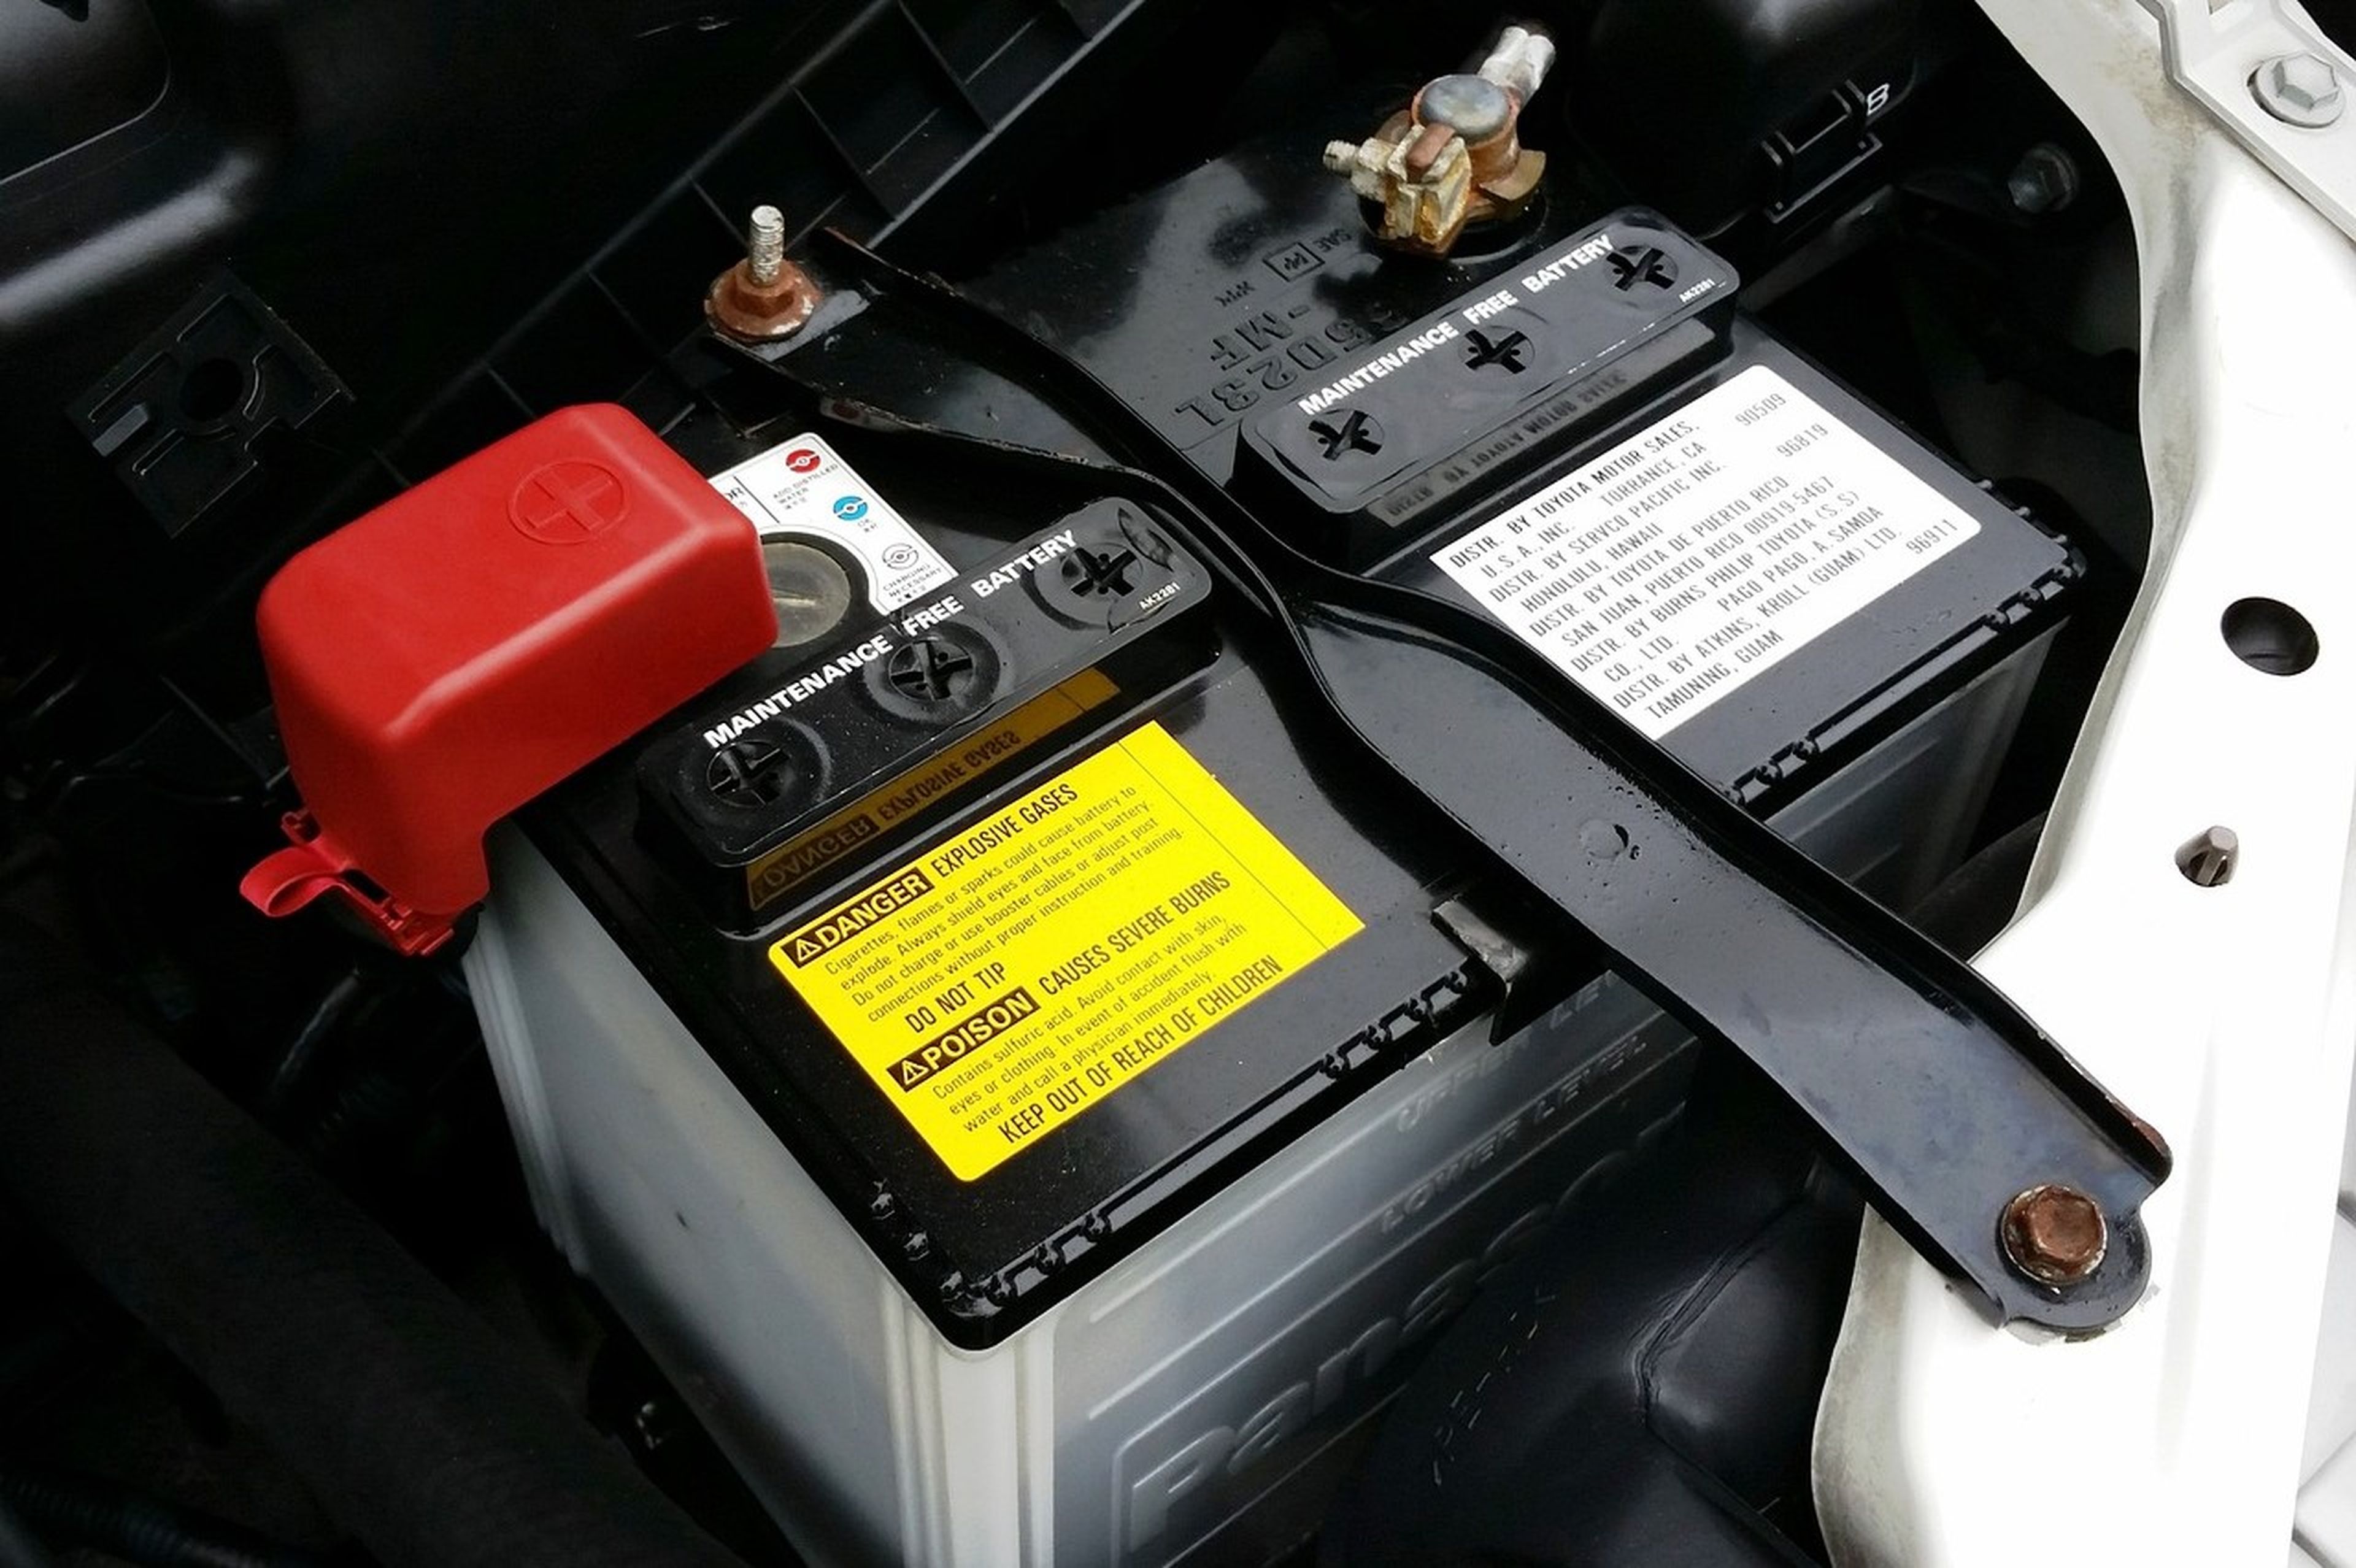 Cómo elegir un buen arrancador de baterías para coches?